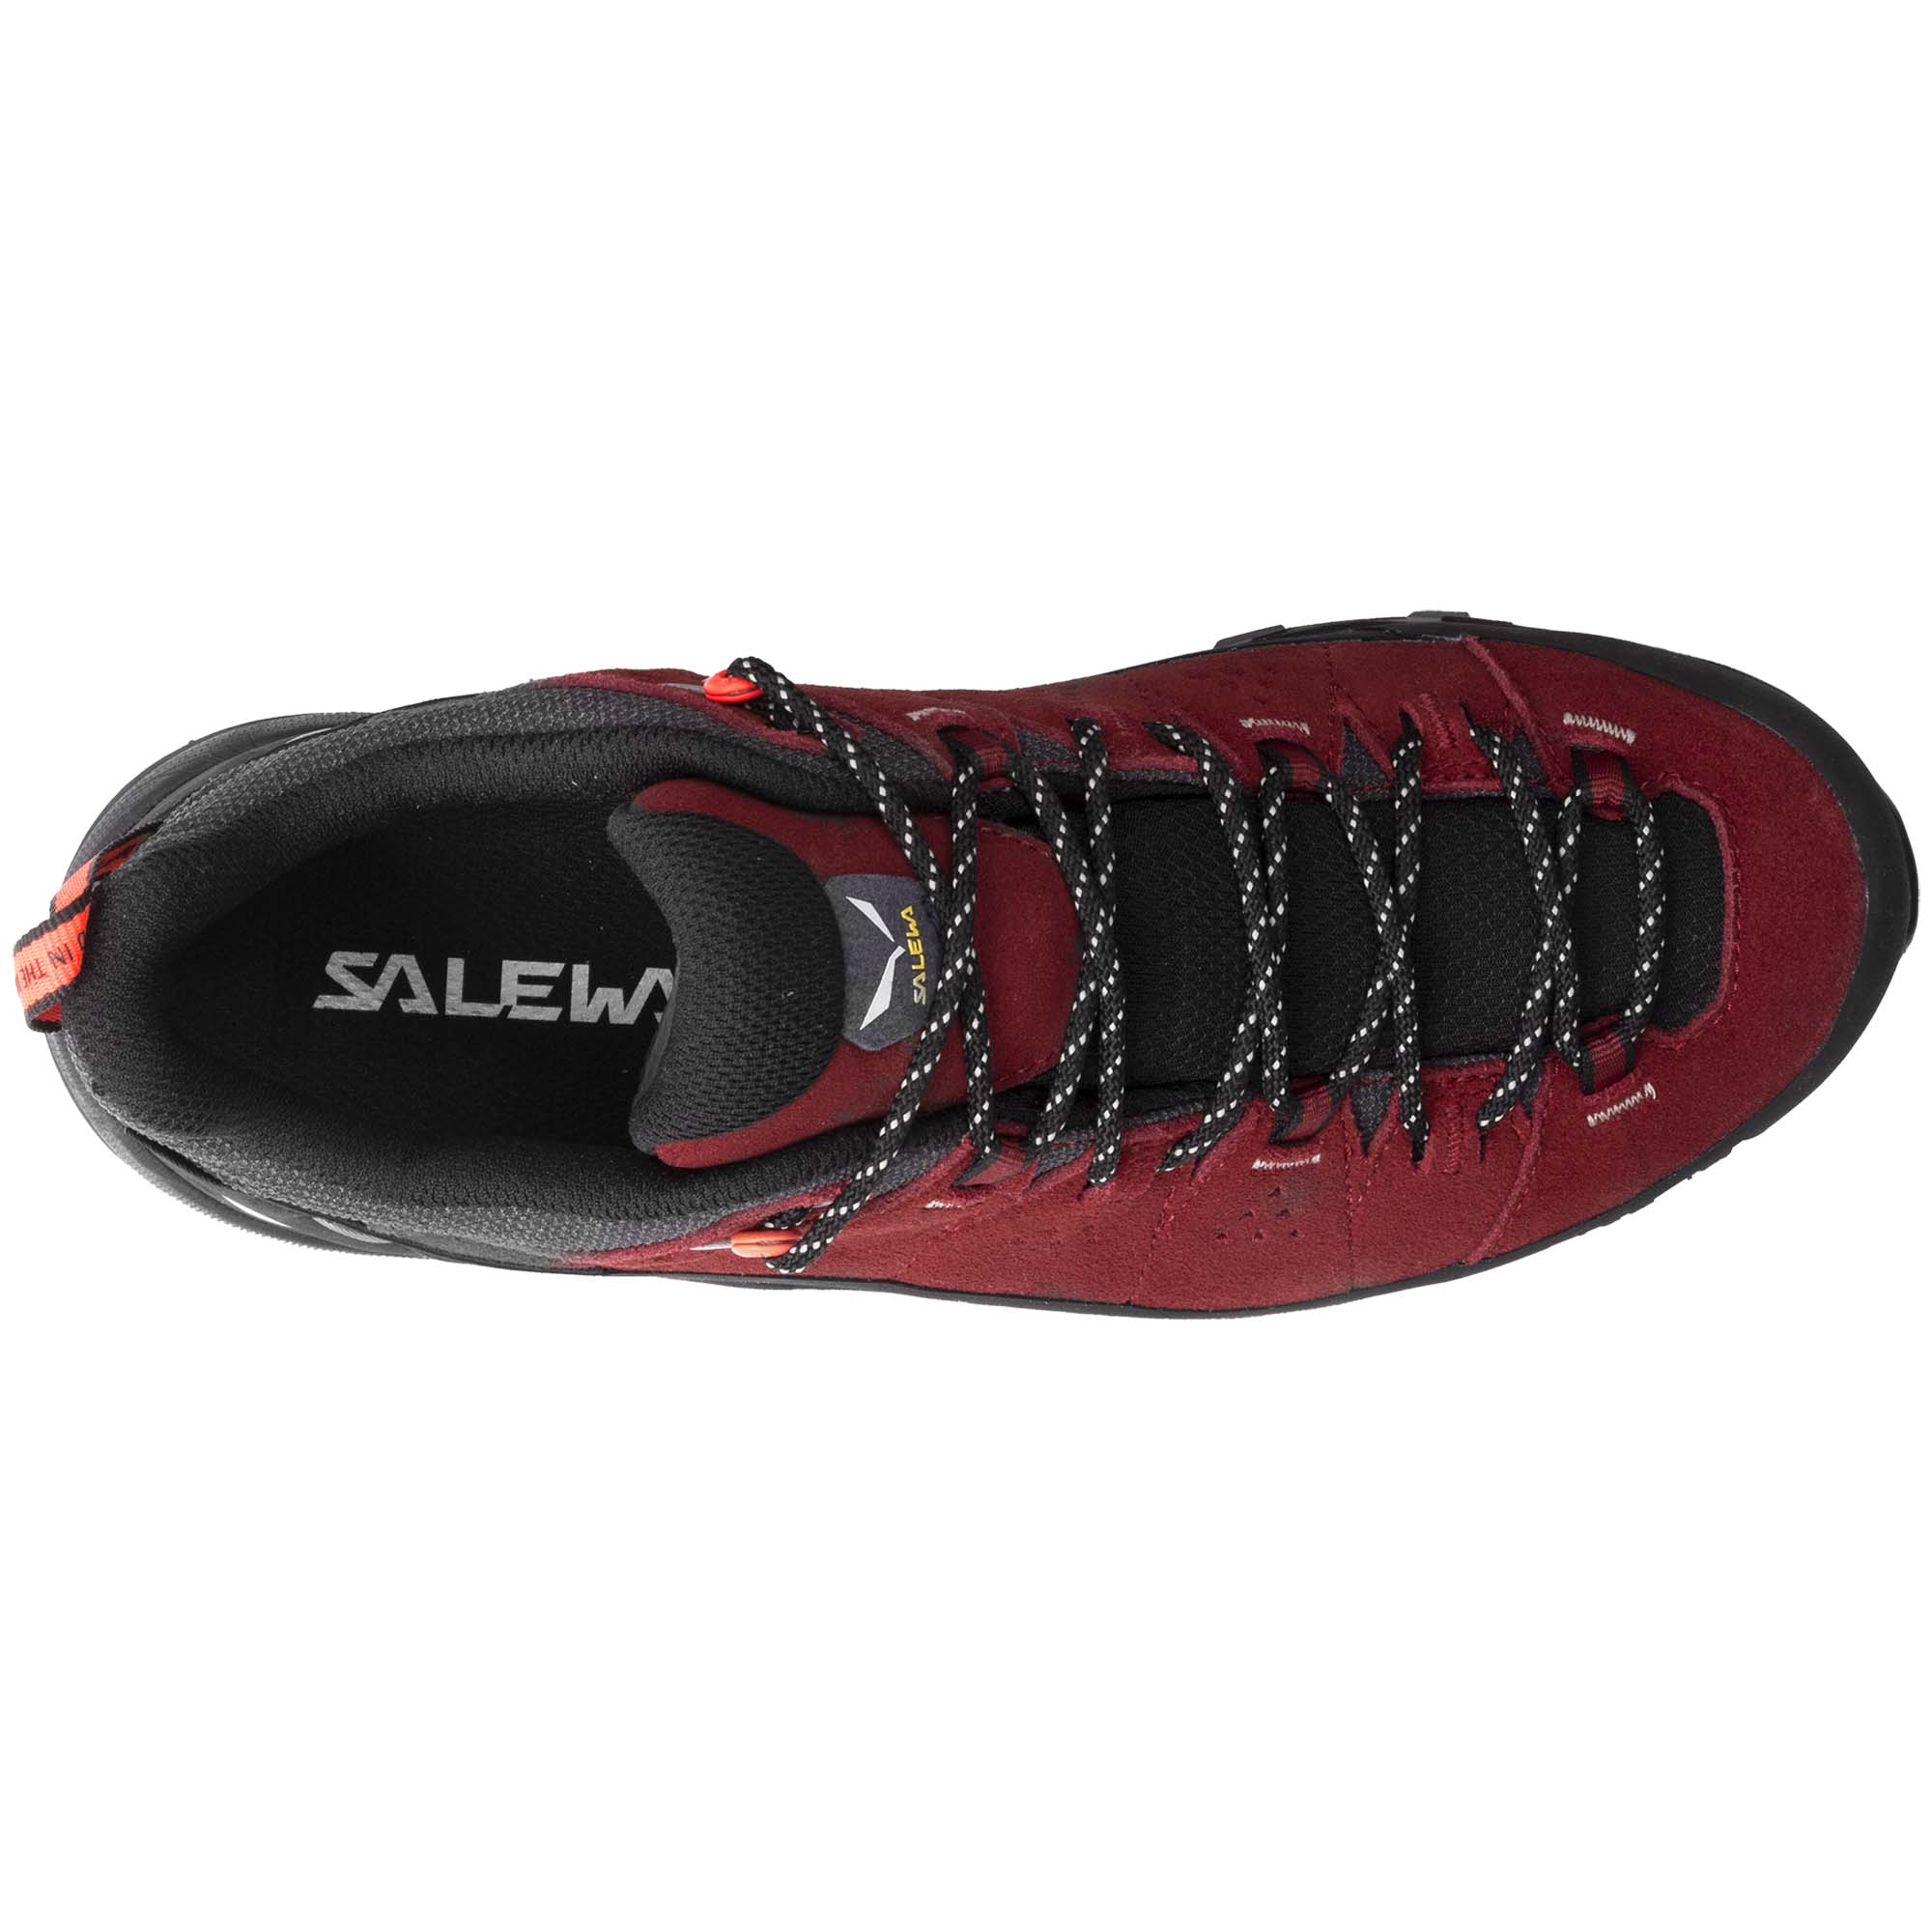 Salewa Alp Trainer 2 GTX Women's Walking Shoes